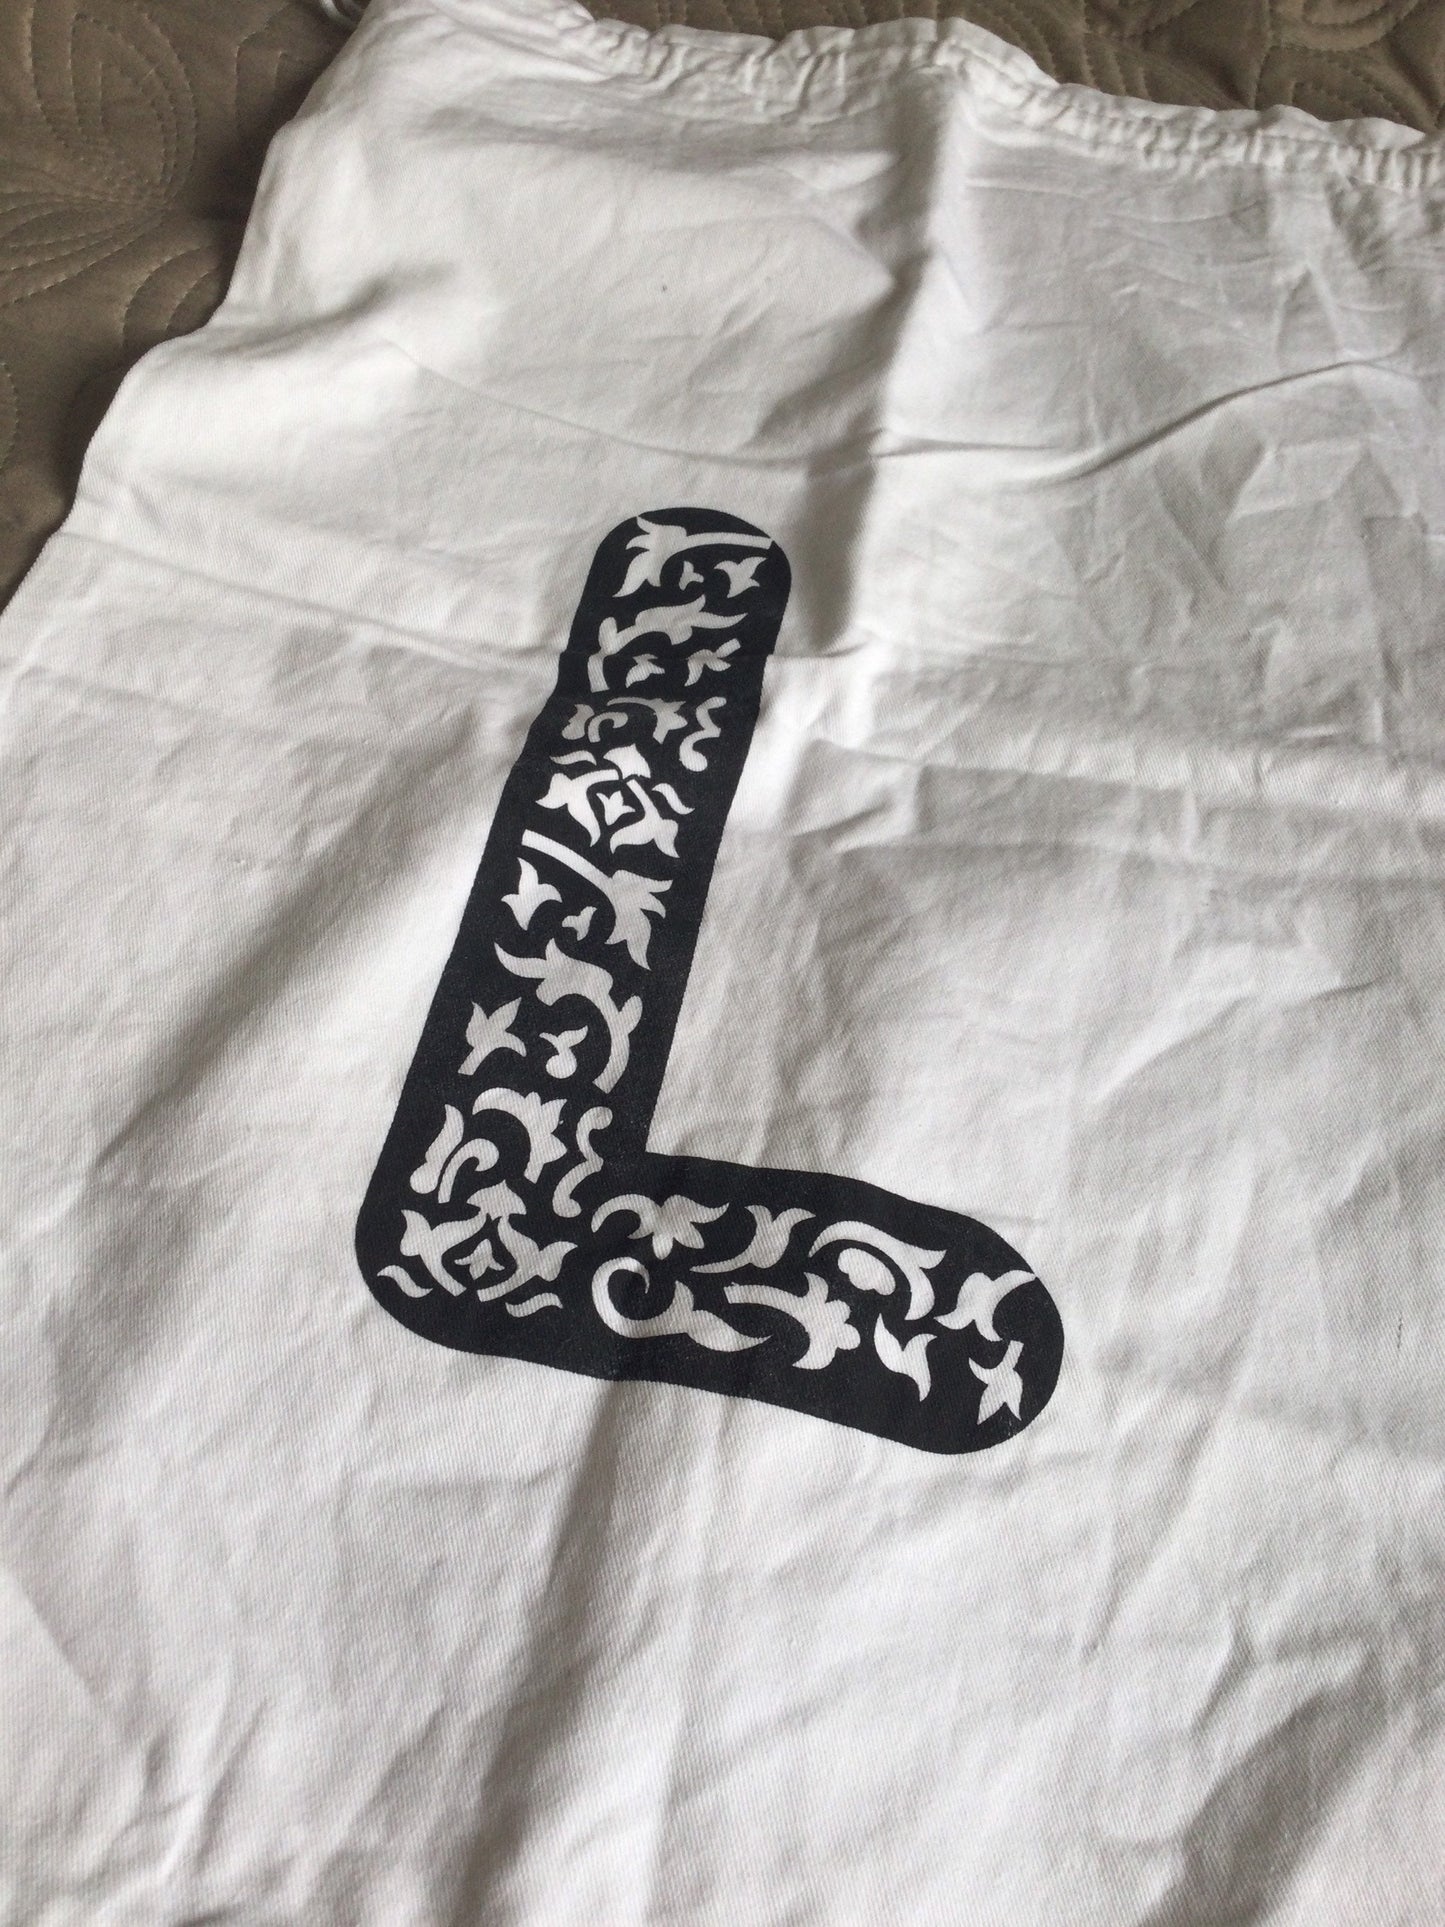 Retro white thick cotton printed black text linen laundry bag drawstring kit bag